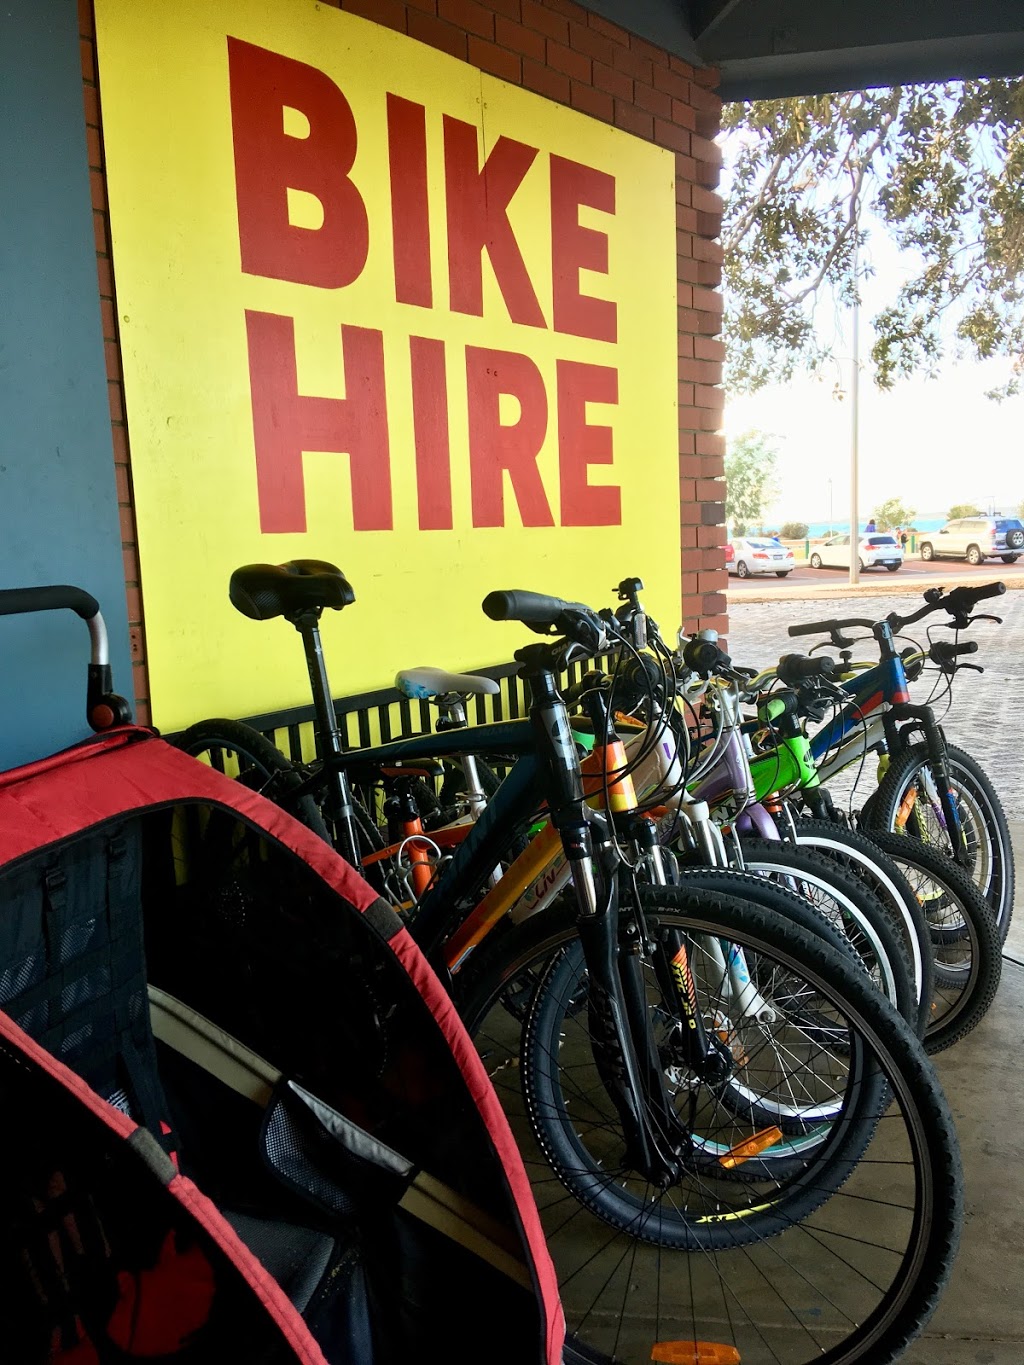 Revolutions Geraldton - Bicycle Sales, Hire & Service | 268 Marine Terrace, Geraldton WA 6530, Australia | Phone: (08) 9964 1399